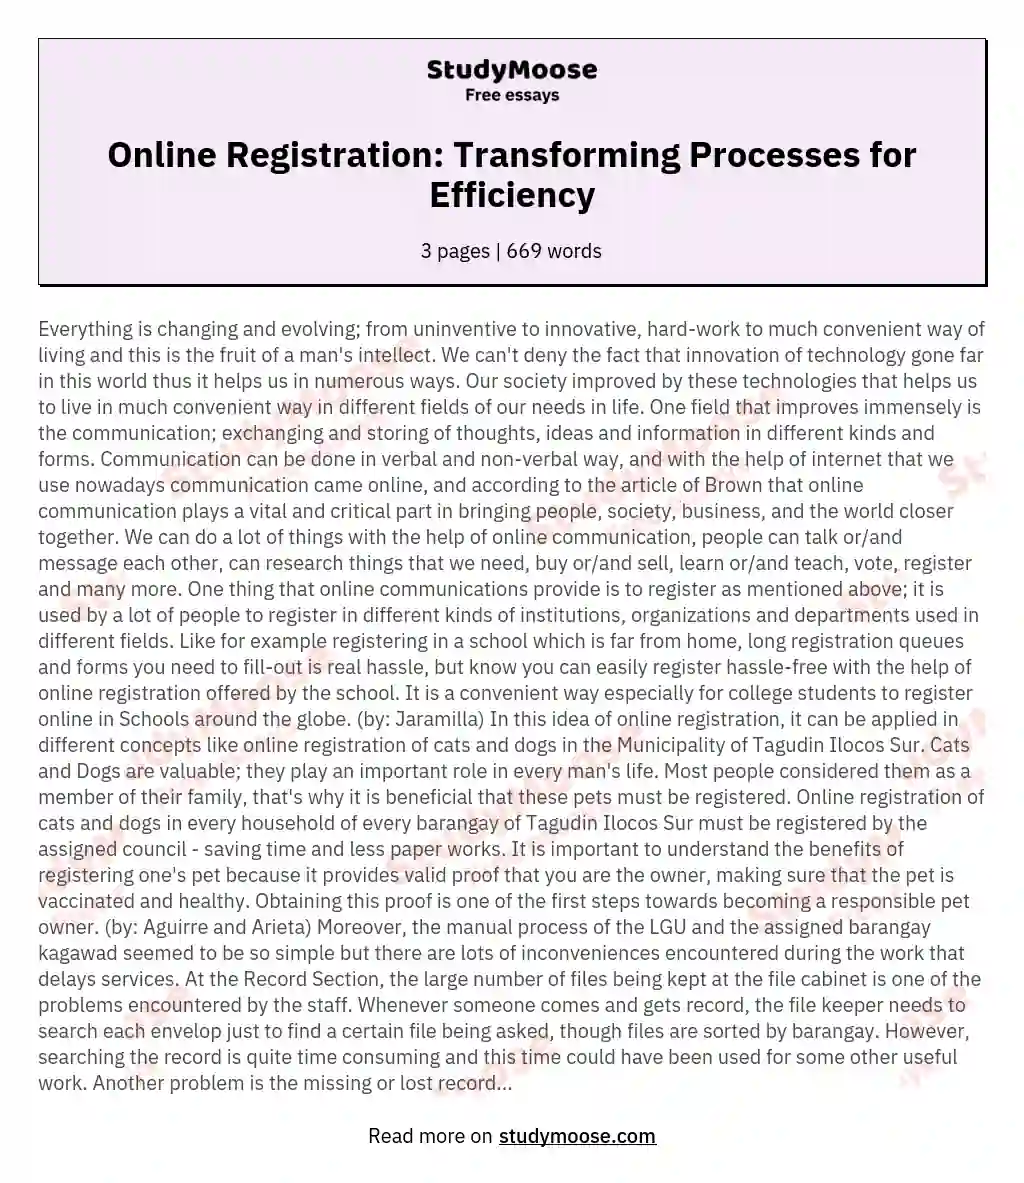 Online Registration: Transforming Processes for Efficiency essay